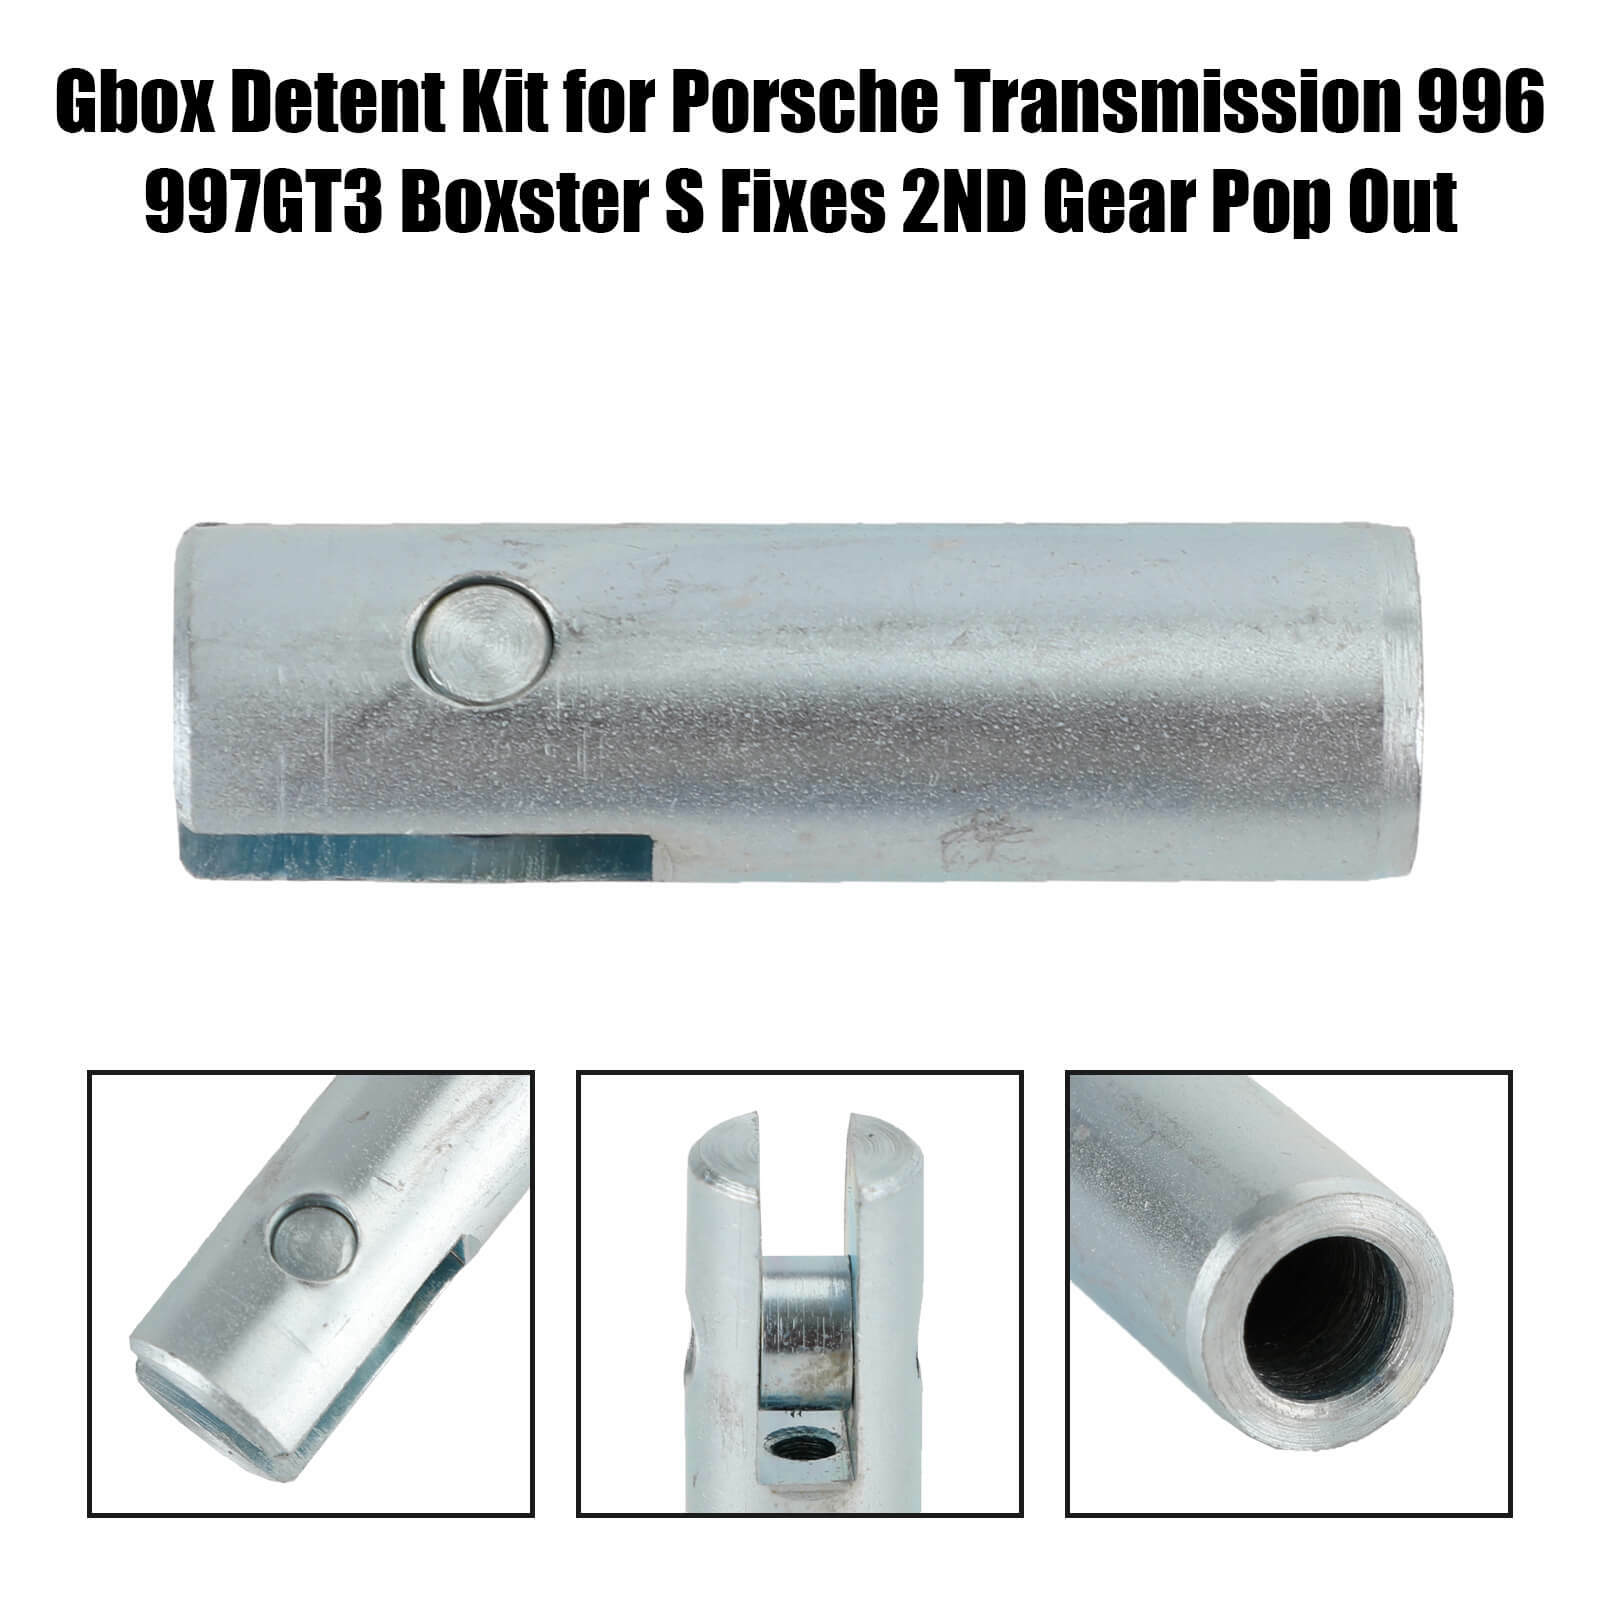 Gbox Detent Kit Porsche Transmission 996 997GT3 Boxster S Fixes 2ND Gear Pop Out